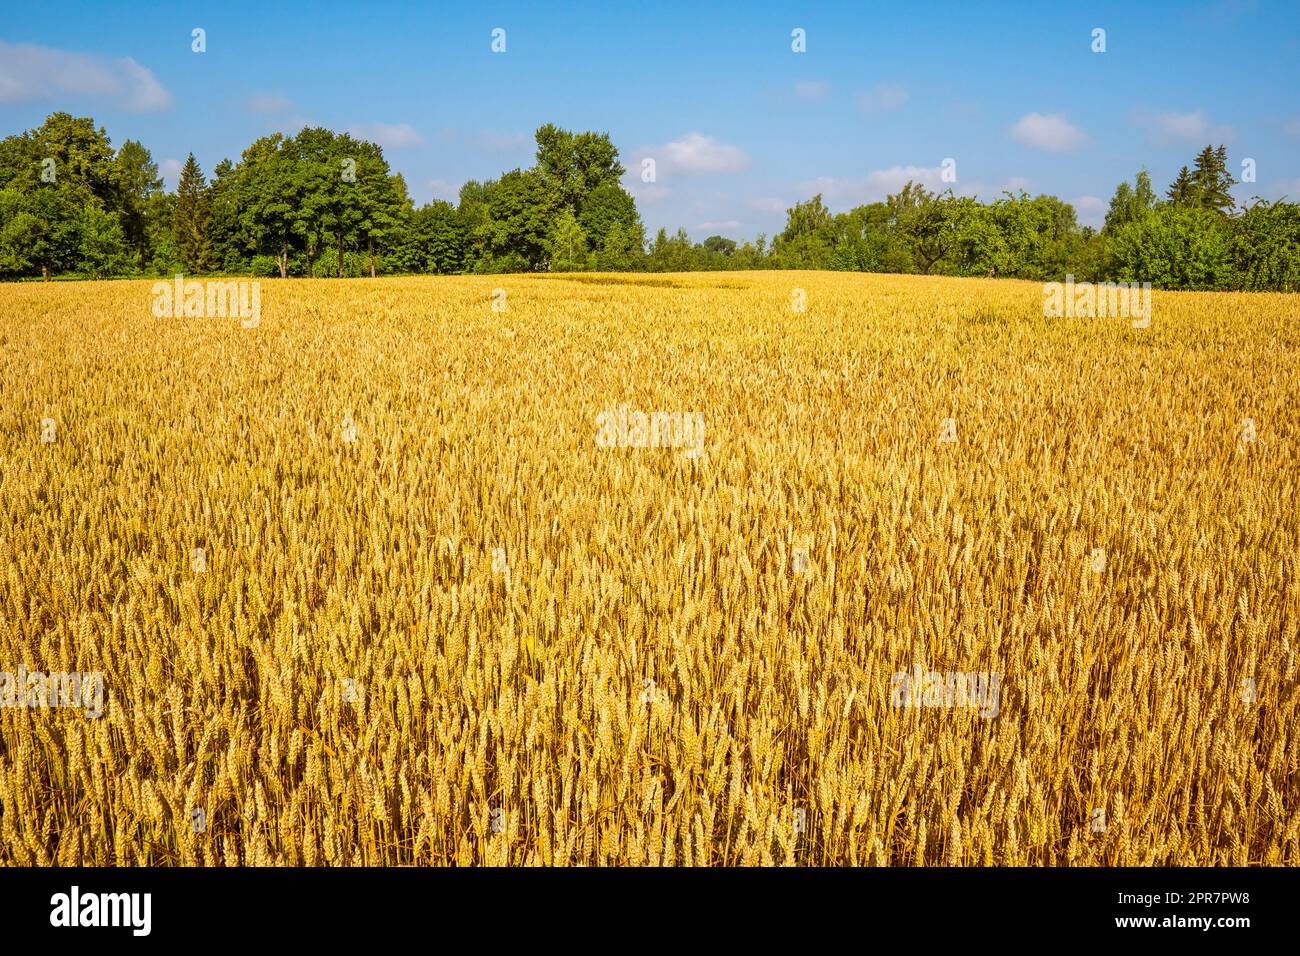 Rural scenery with ripe wheat field, wheat ears Stock Photo